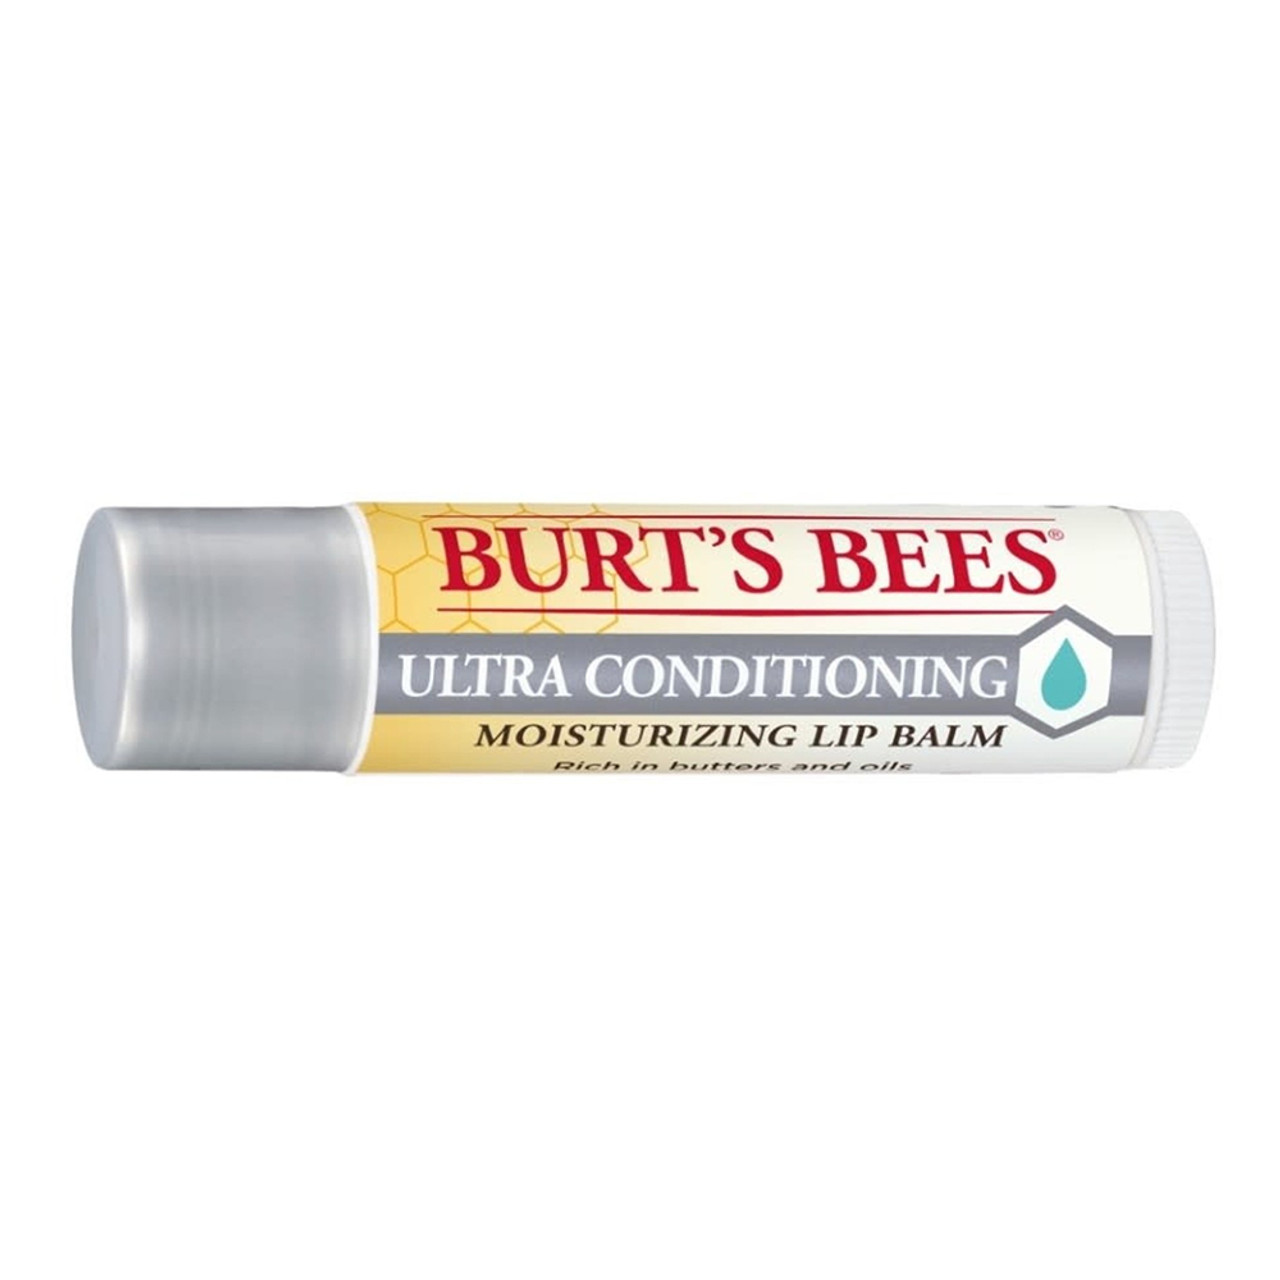 Burts Bees Natural Moisturizing Lip Balm with Beeswax, 0.6 Oz